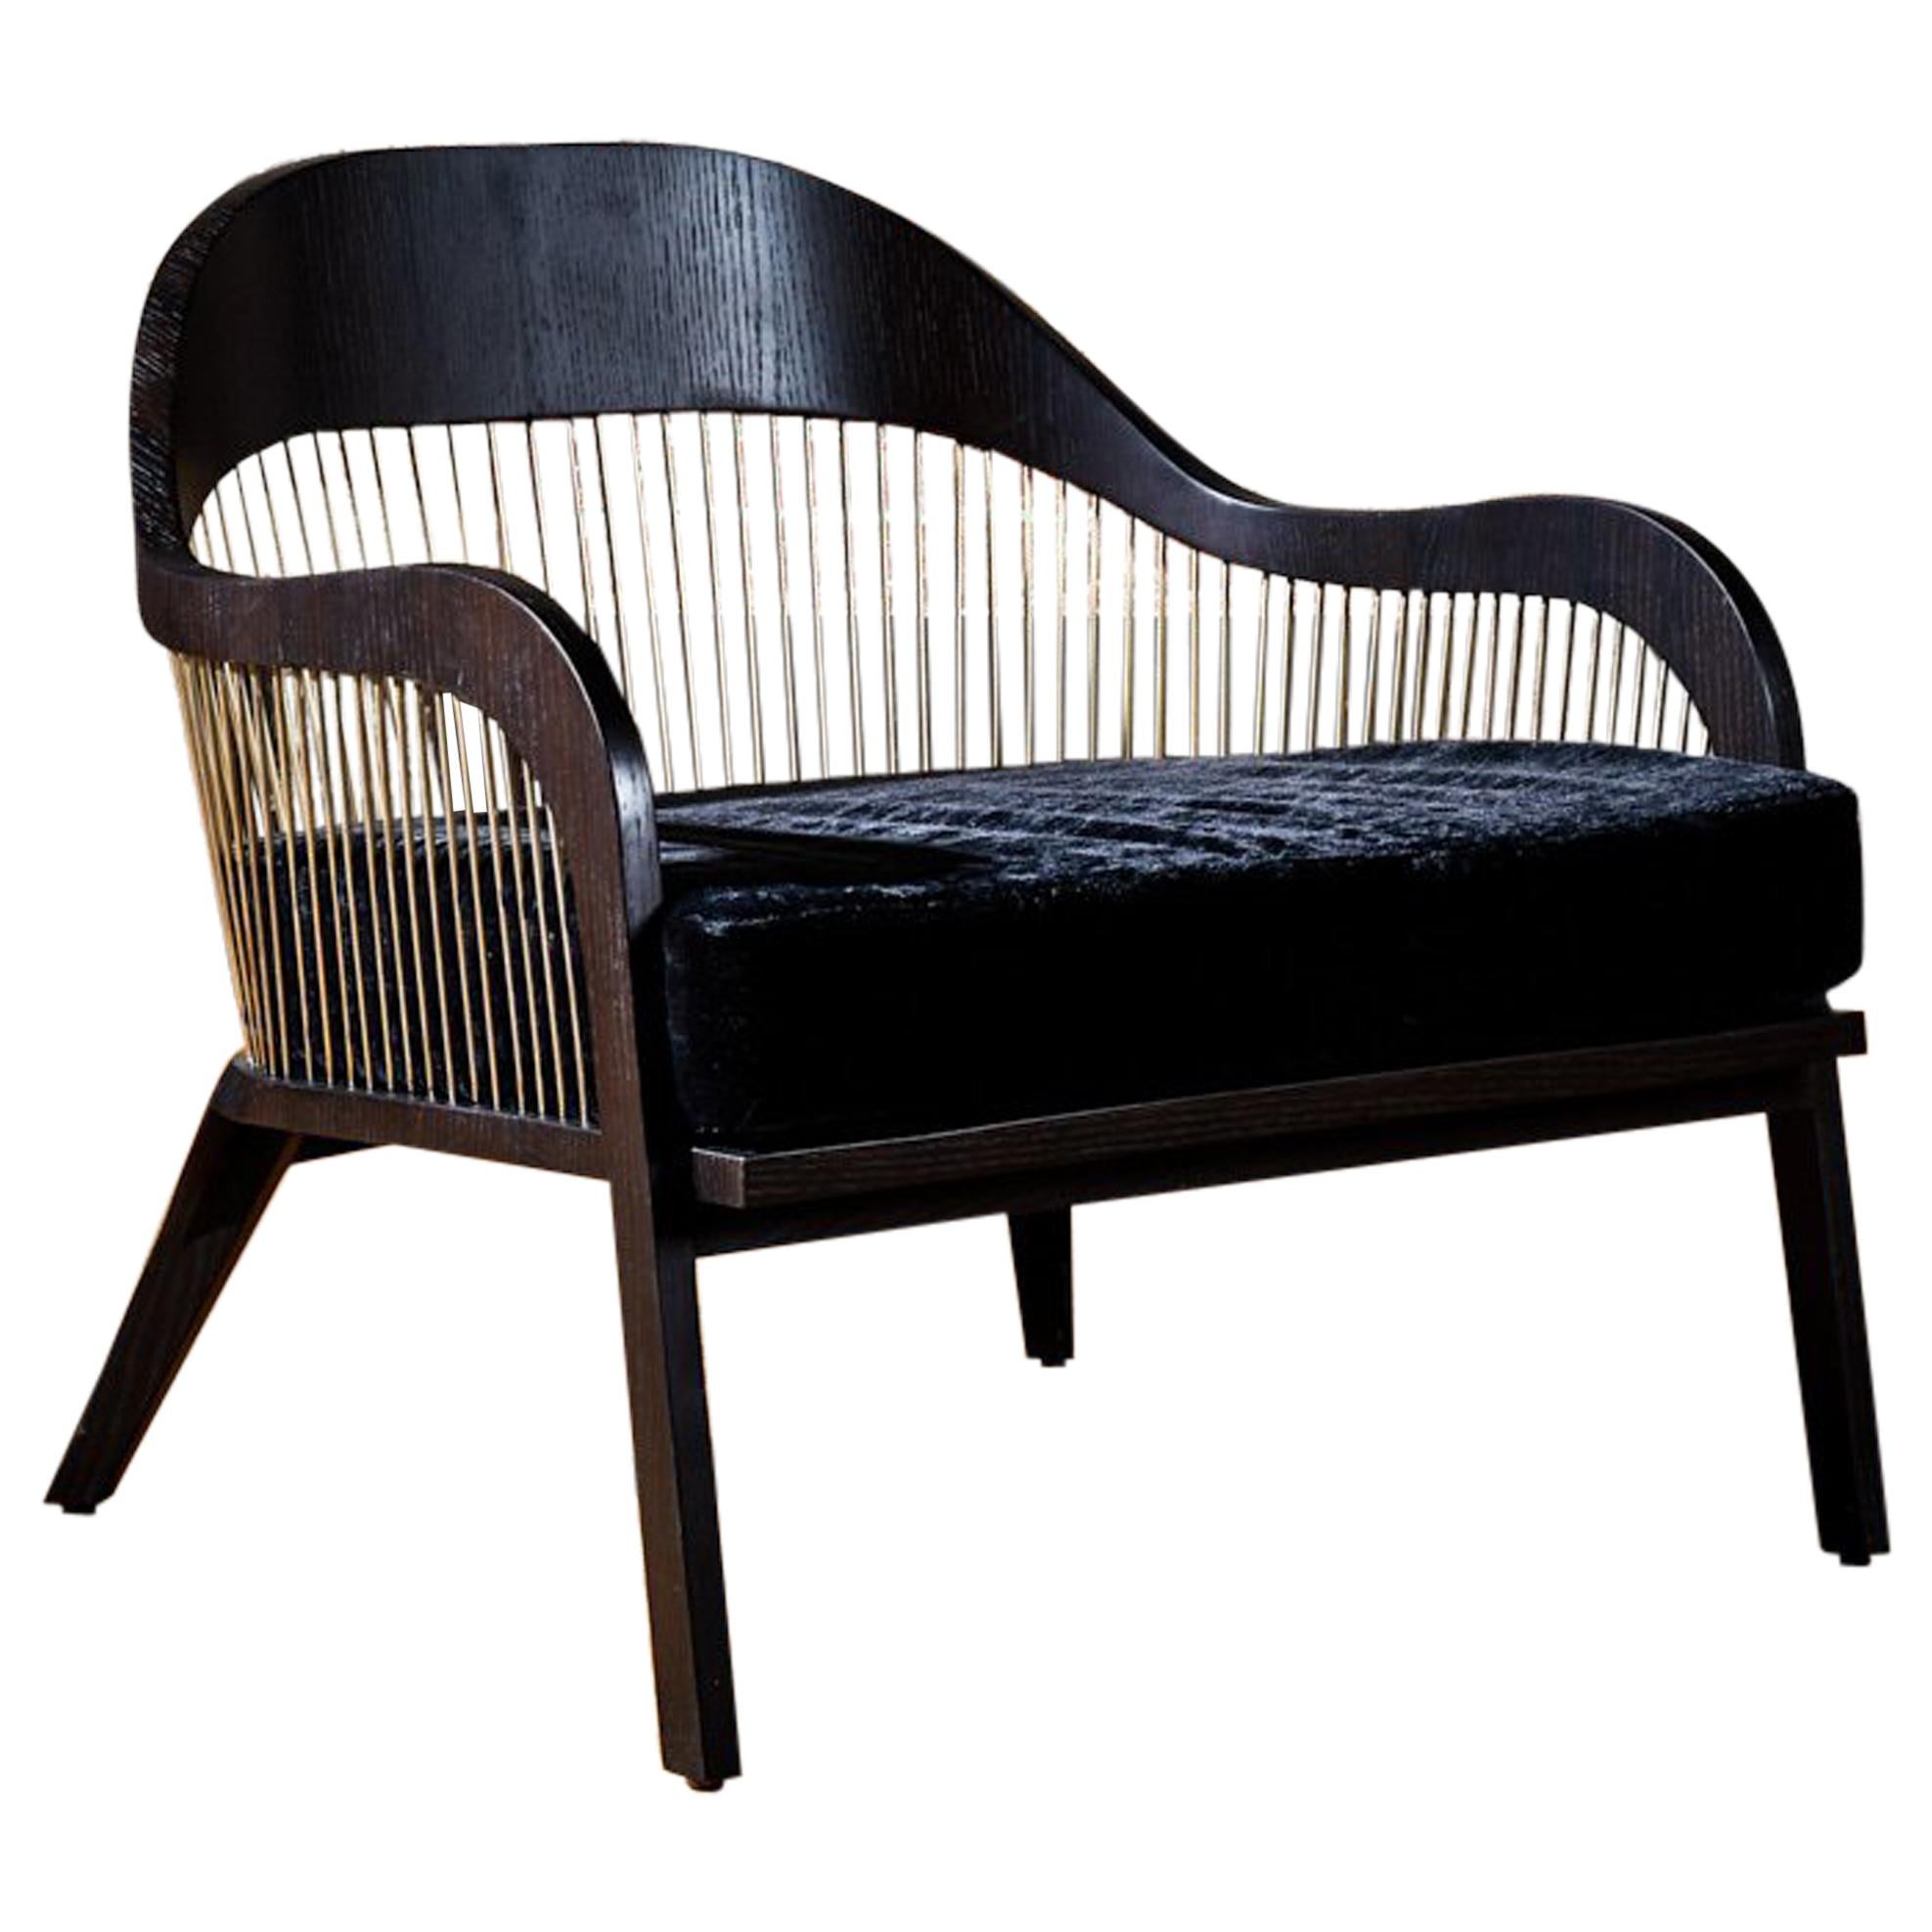 Lanka Armchair, by Reda Amalou Design, 2015 -  Contemporary bergere seat